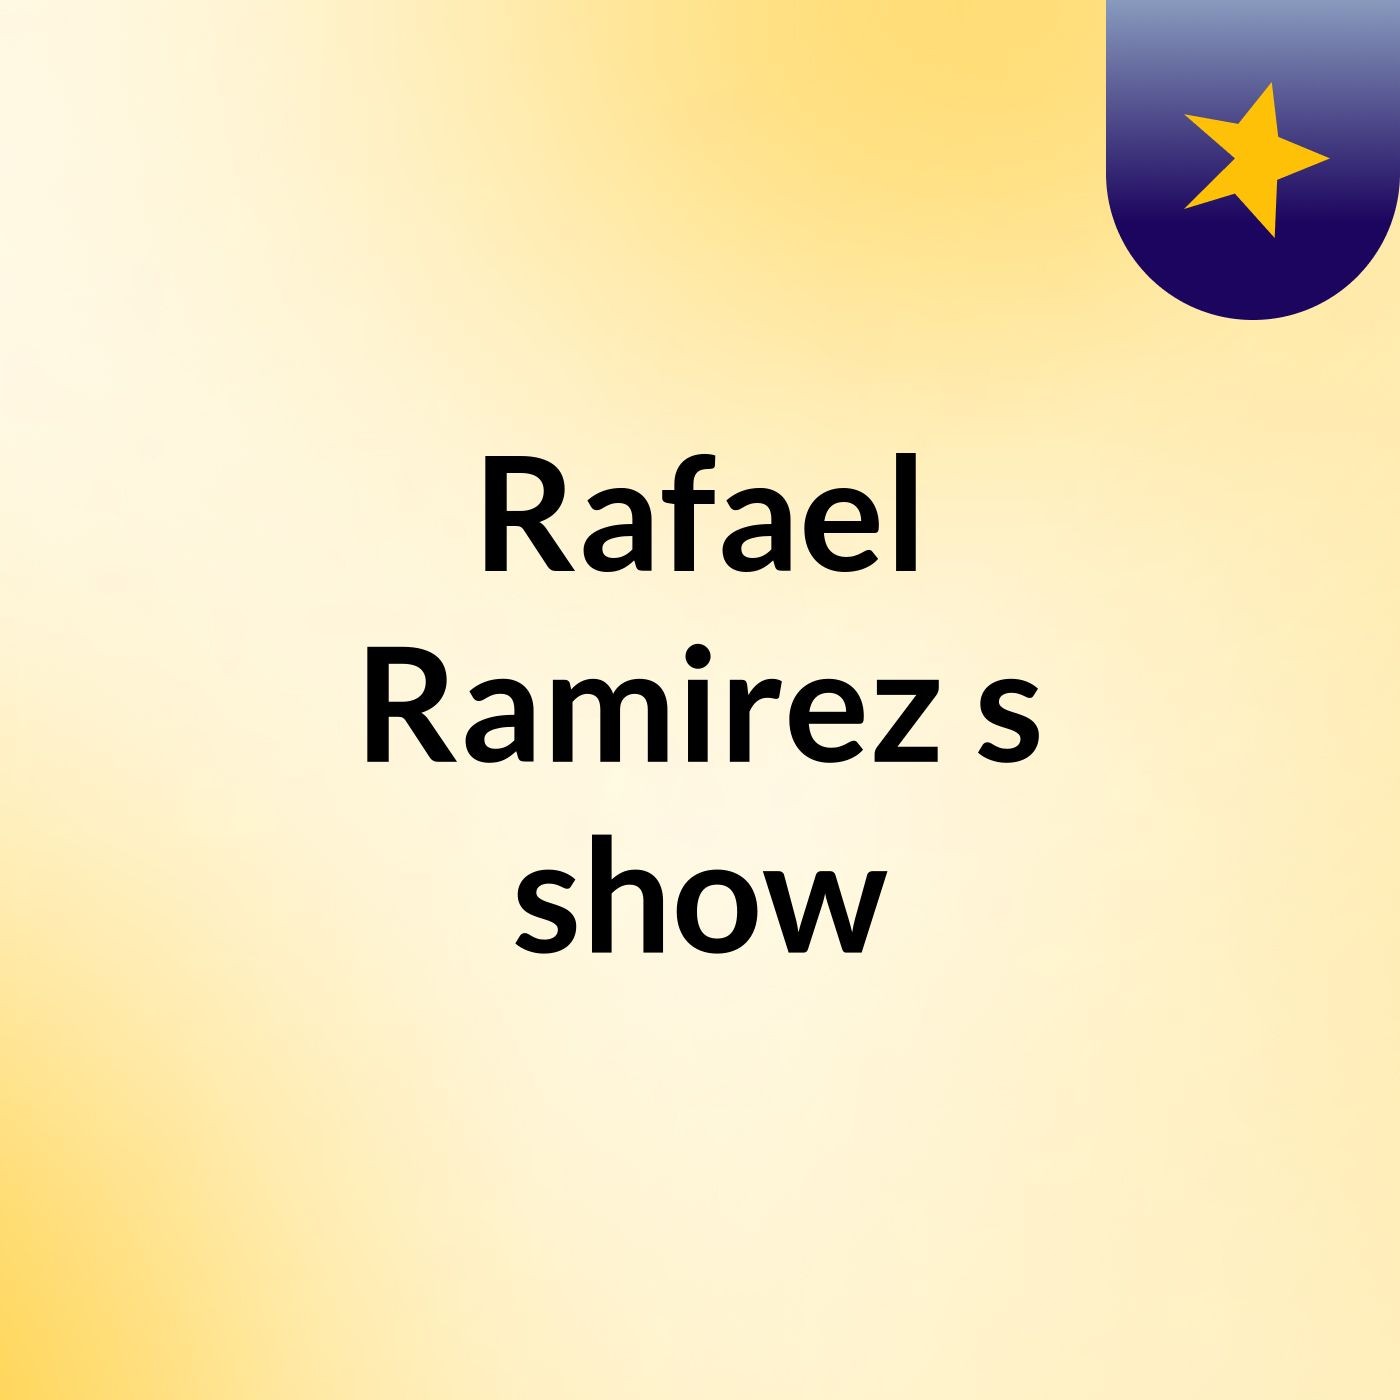 Rafael Ramirez's show